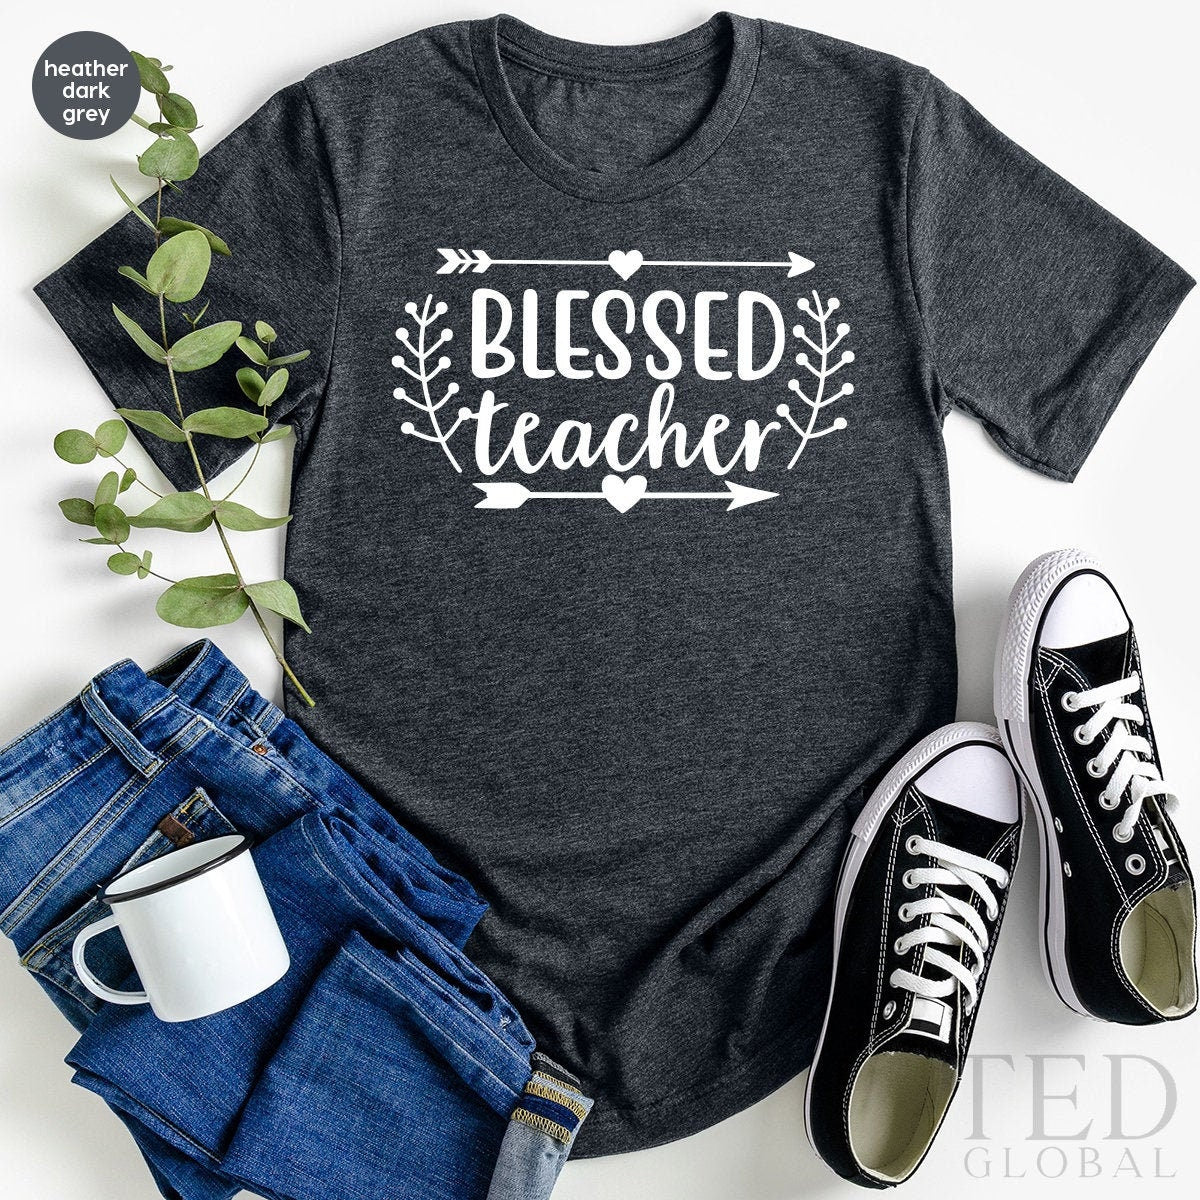 Teacher TShirt, Gift For Teachers, Elementary Teacher T-Shirts, Blessed Teacher Shirt, Educators T Shirt, Kindergarten Teacher Tees - Fastdeliverytees.com